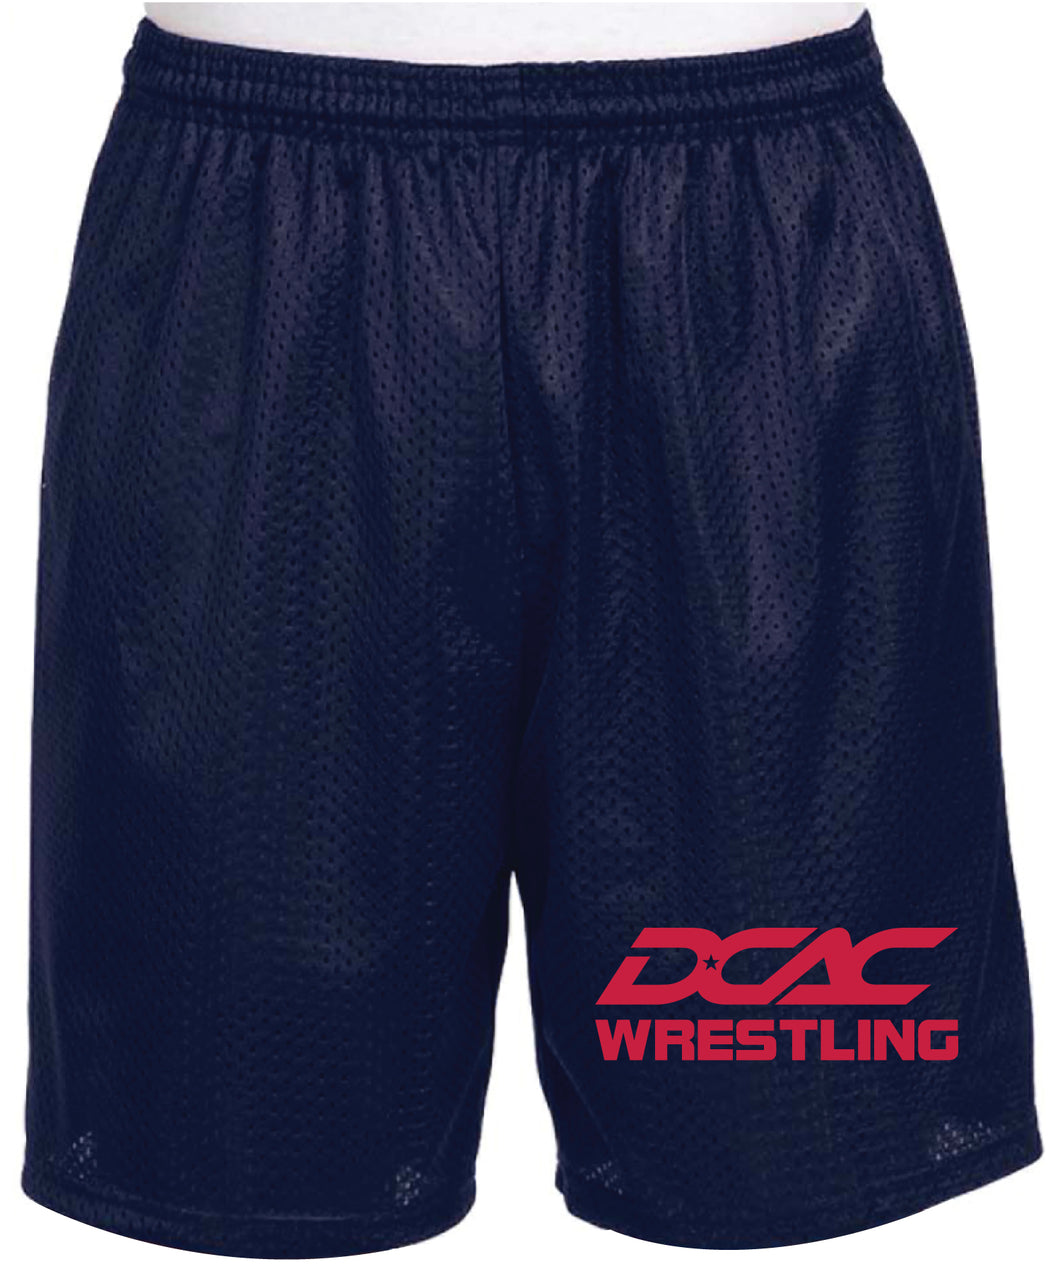 DCAC Tech Shorts - 5KounT